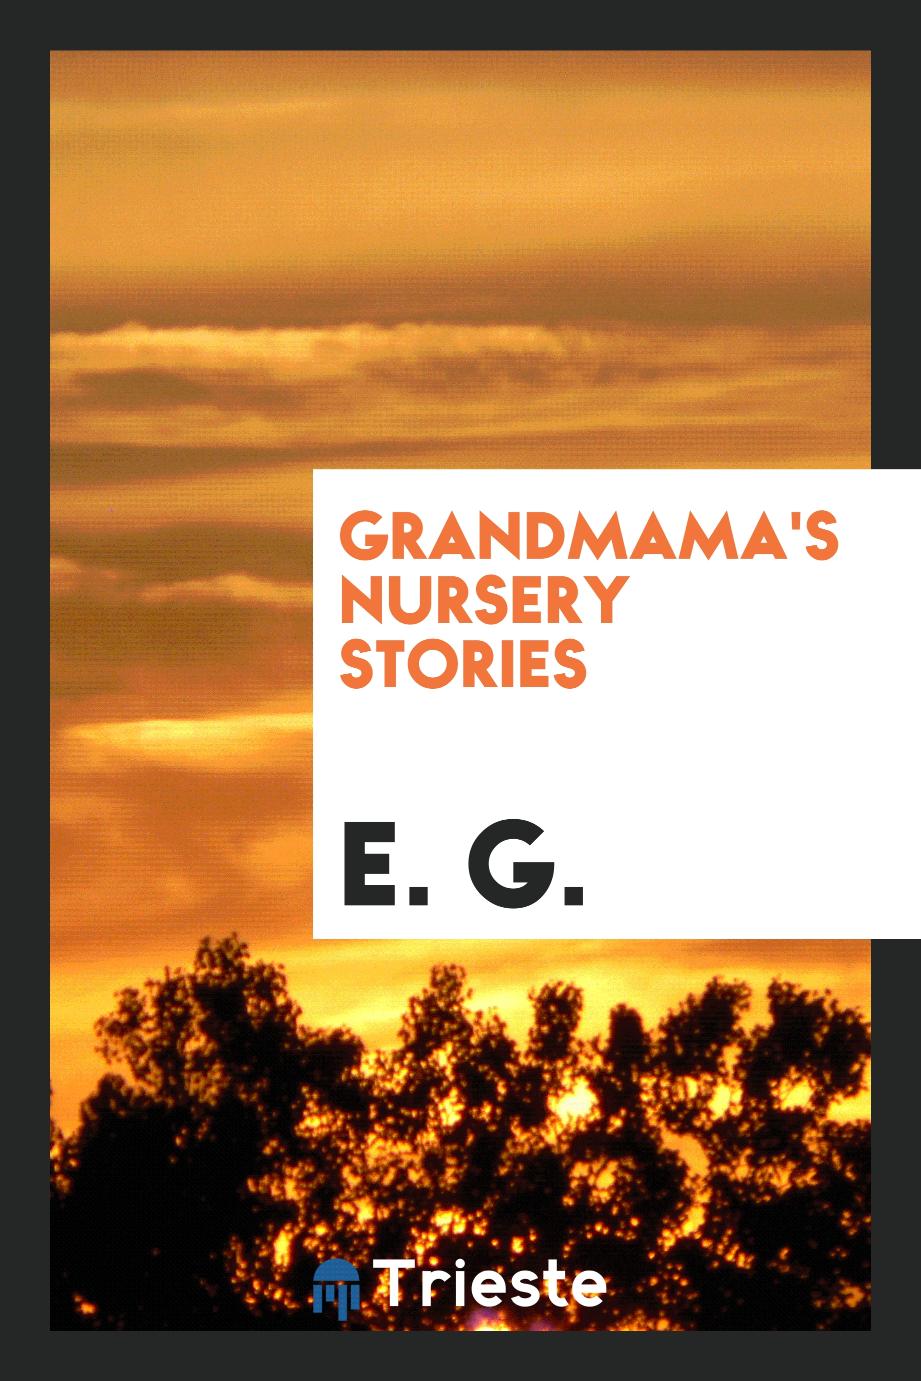 Grandmama's nursery stories